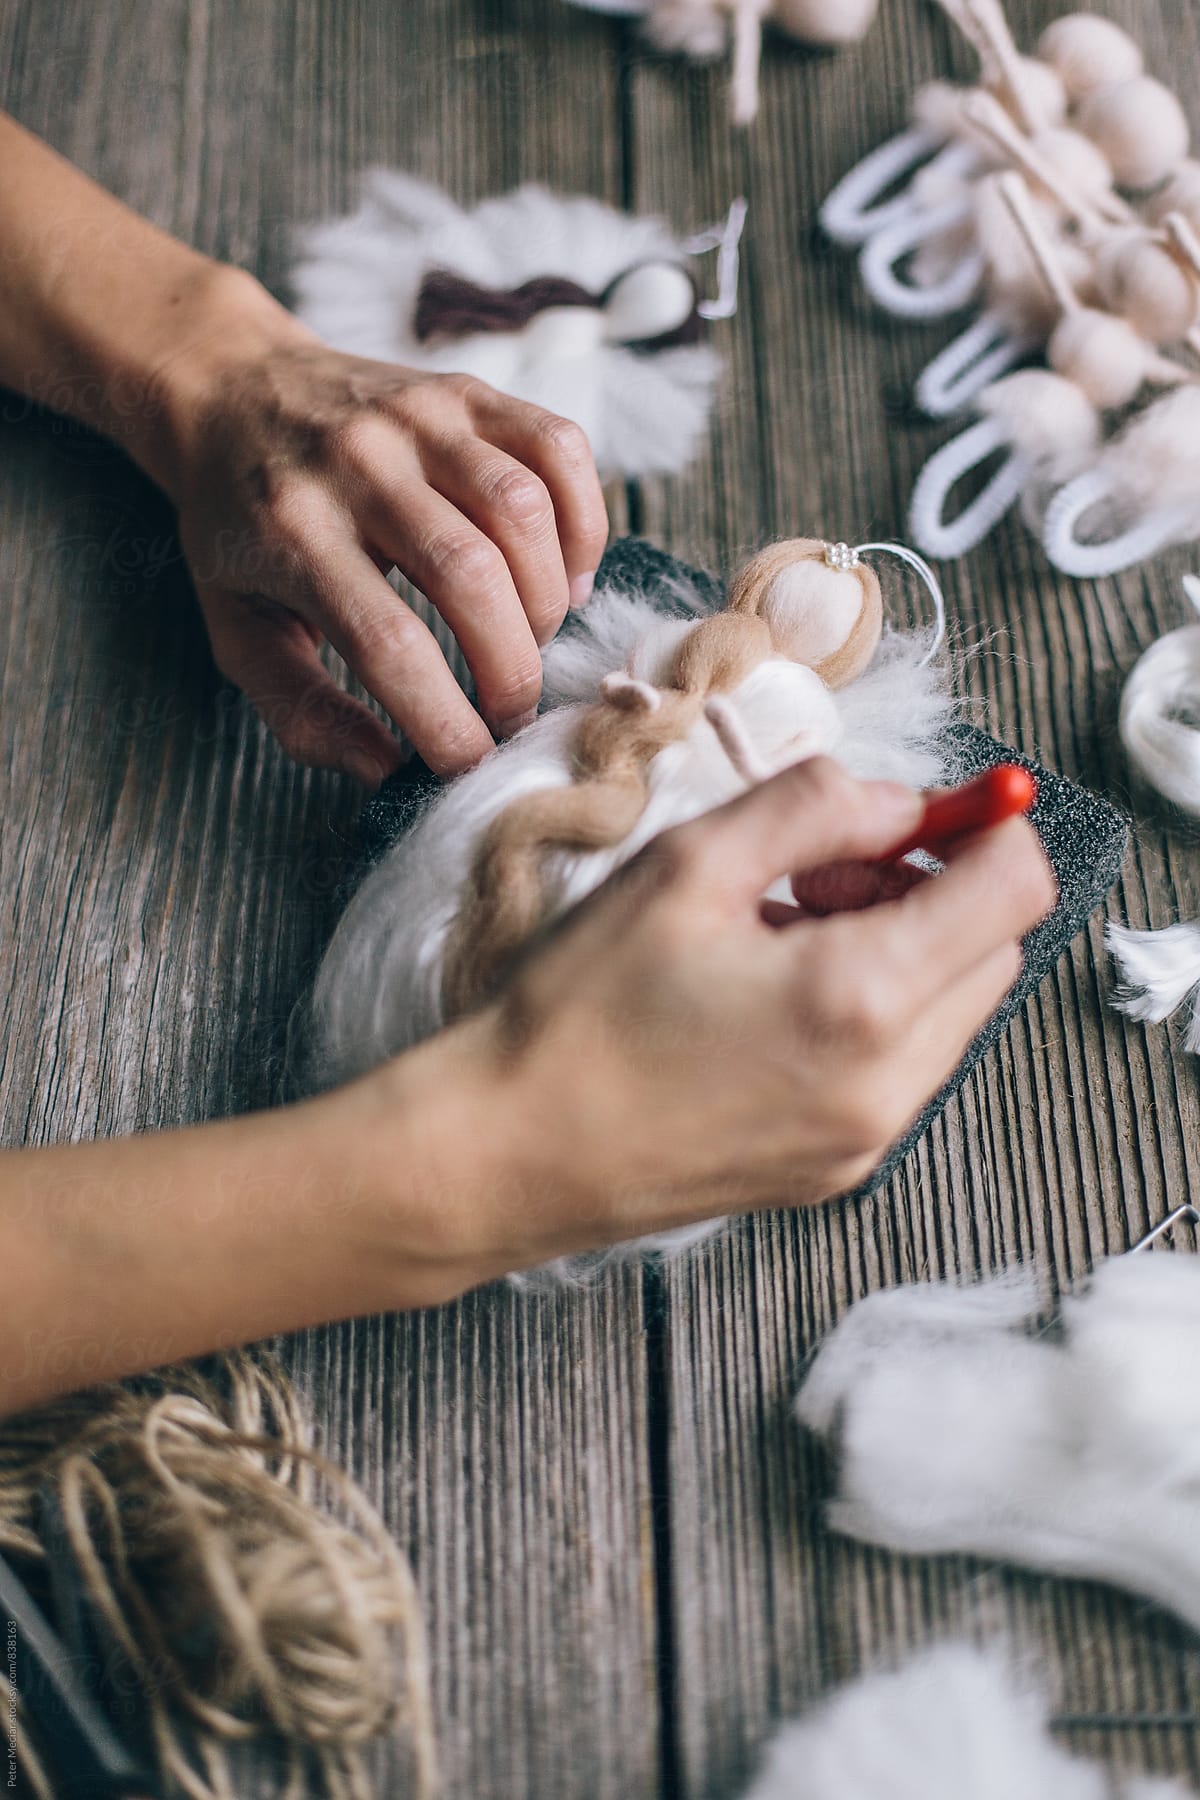 Handmade production of an angel made of merino wool